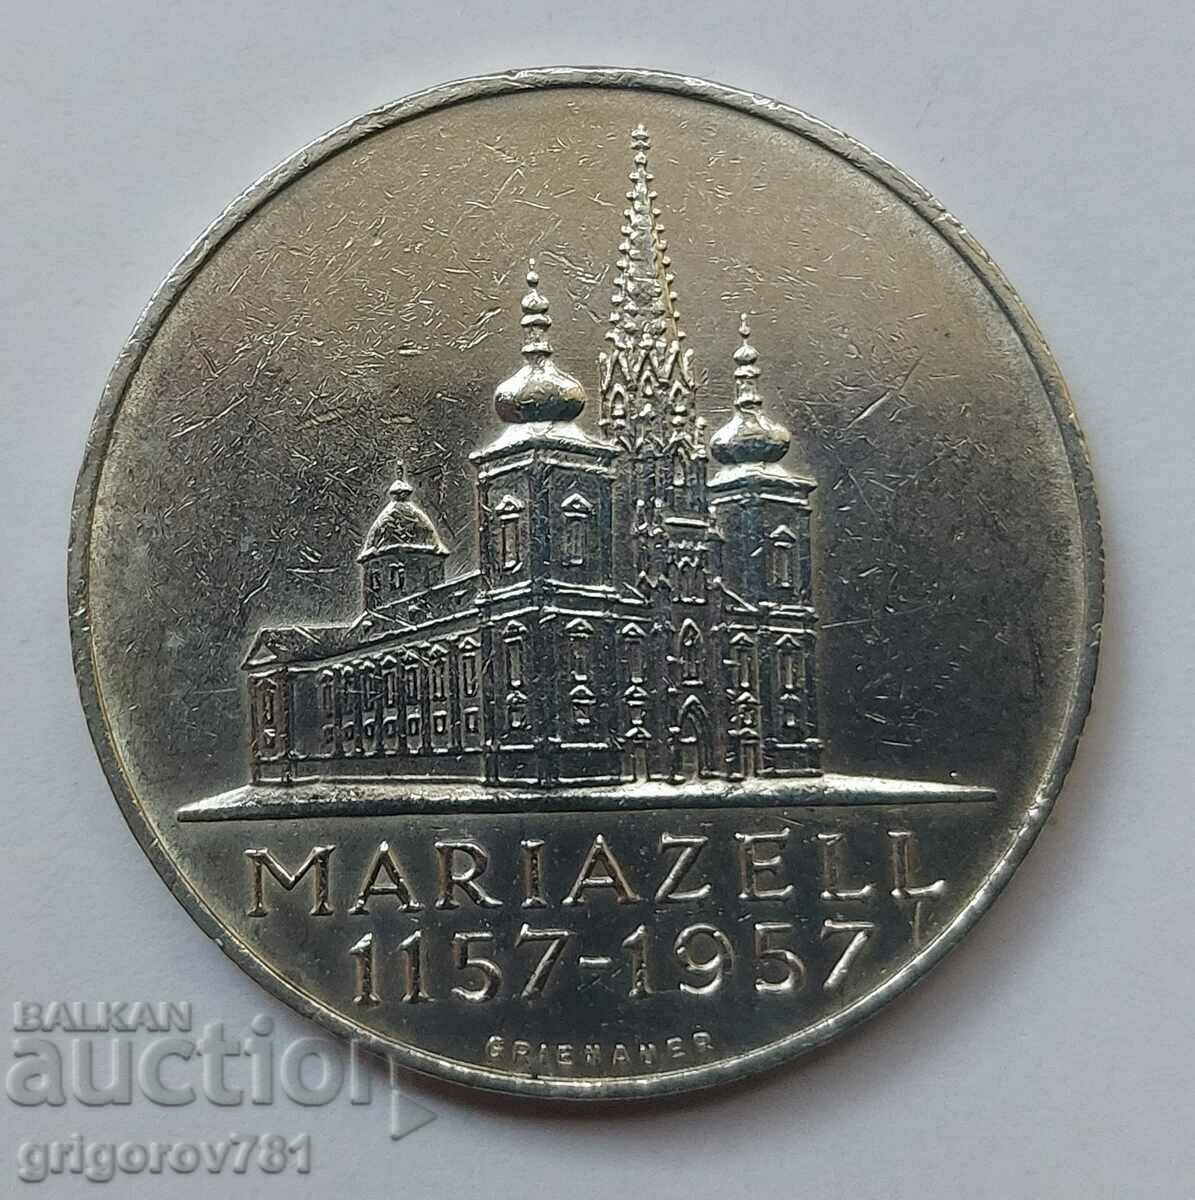 25 Shilling Silver Austria 1957 - Silver Coin #2